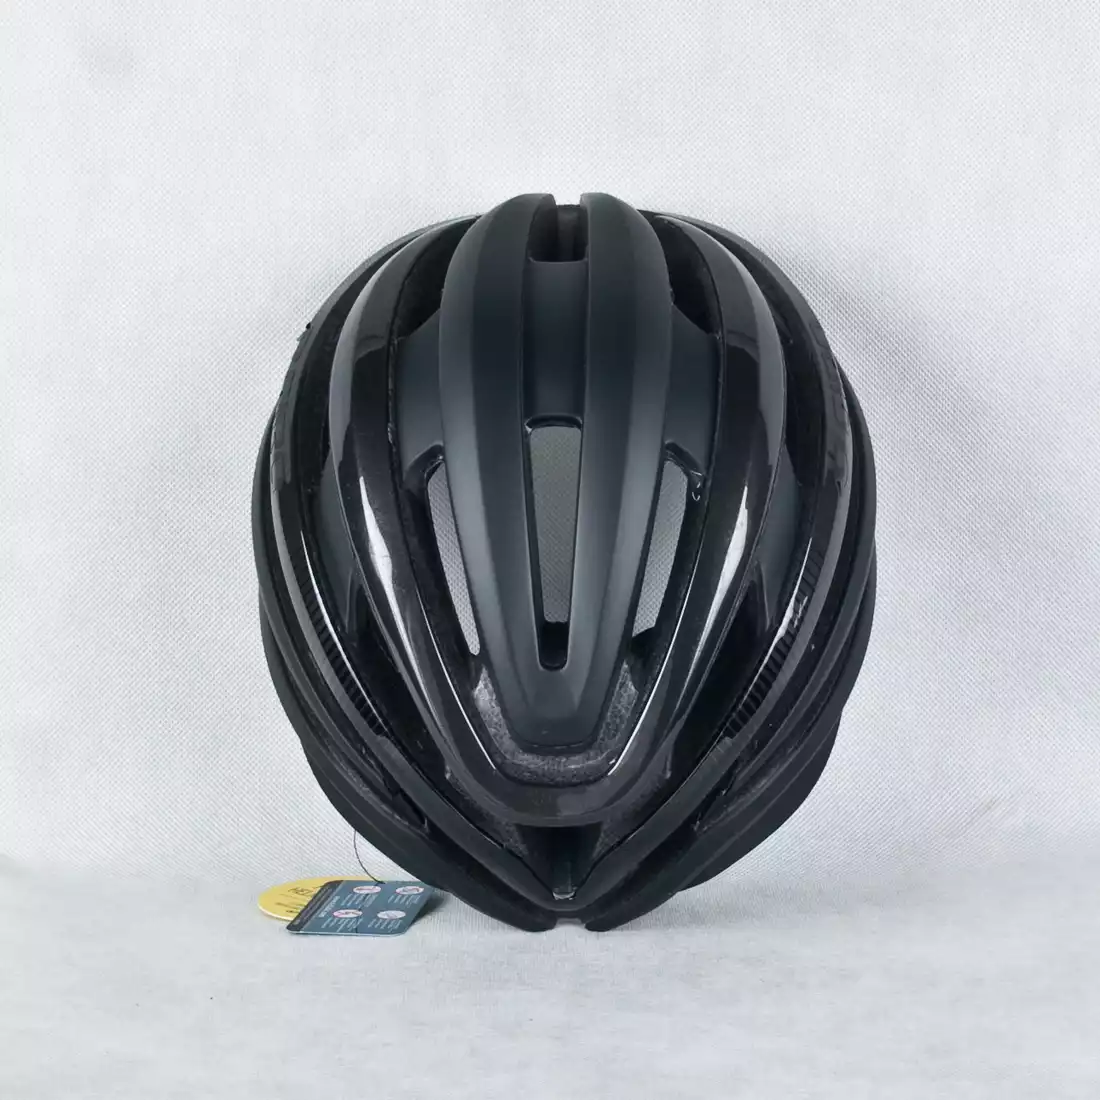 GIRO CINDER MIPS - kask rowerowy czarny mat